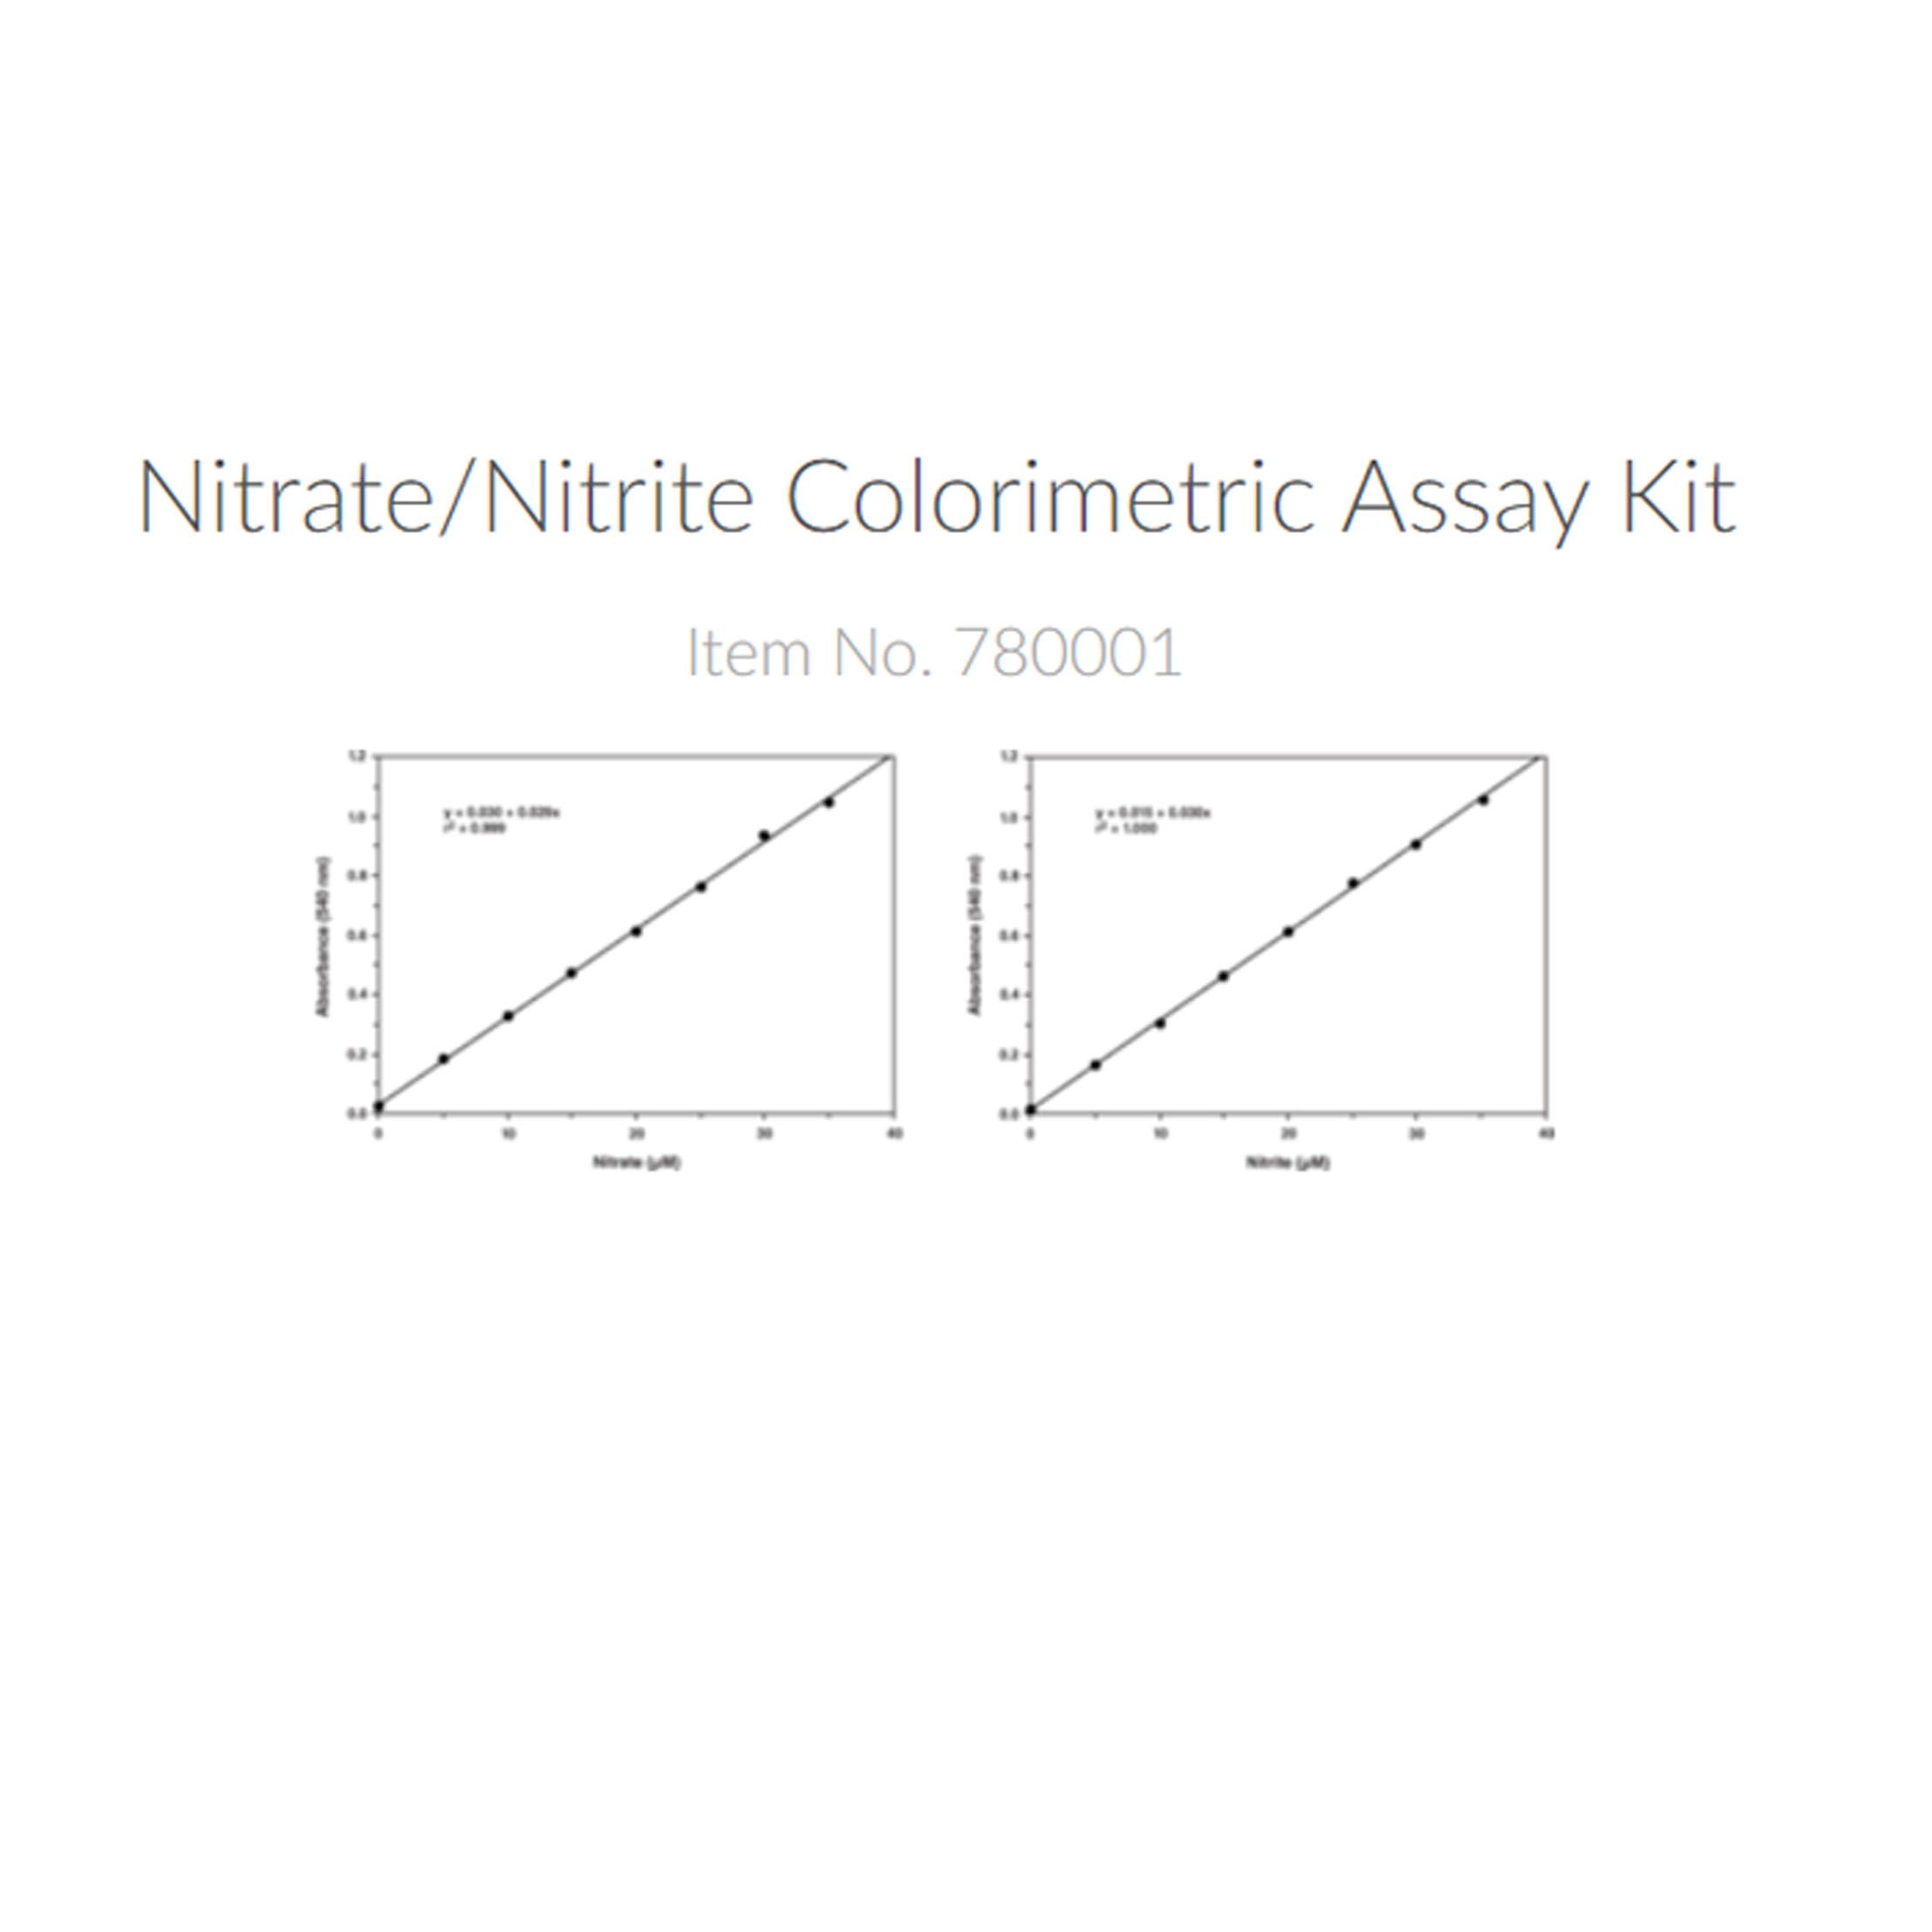 Cayman780001硝酸盐/亚硝酸盐比色测定试剂盒， Nitrate/Nitrite Colorimetric Assay Kit，2 x 96 wells